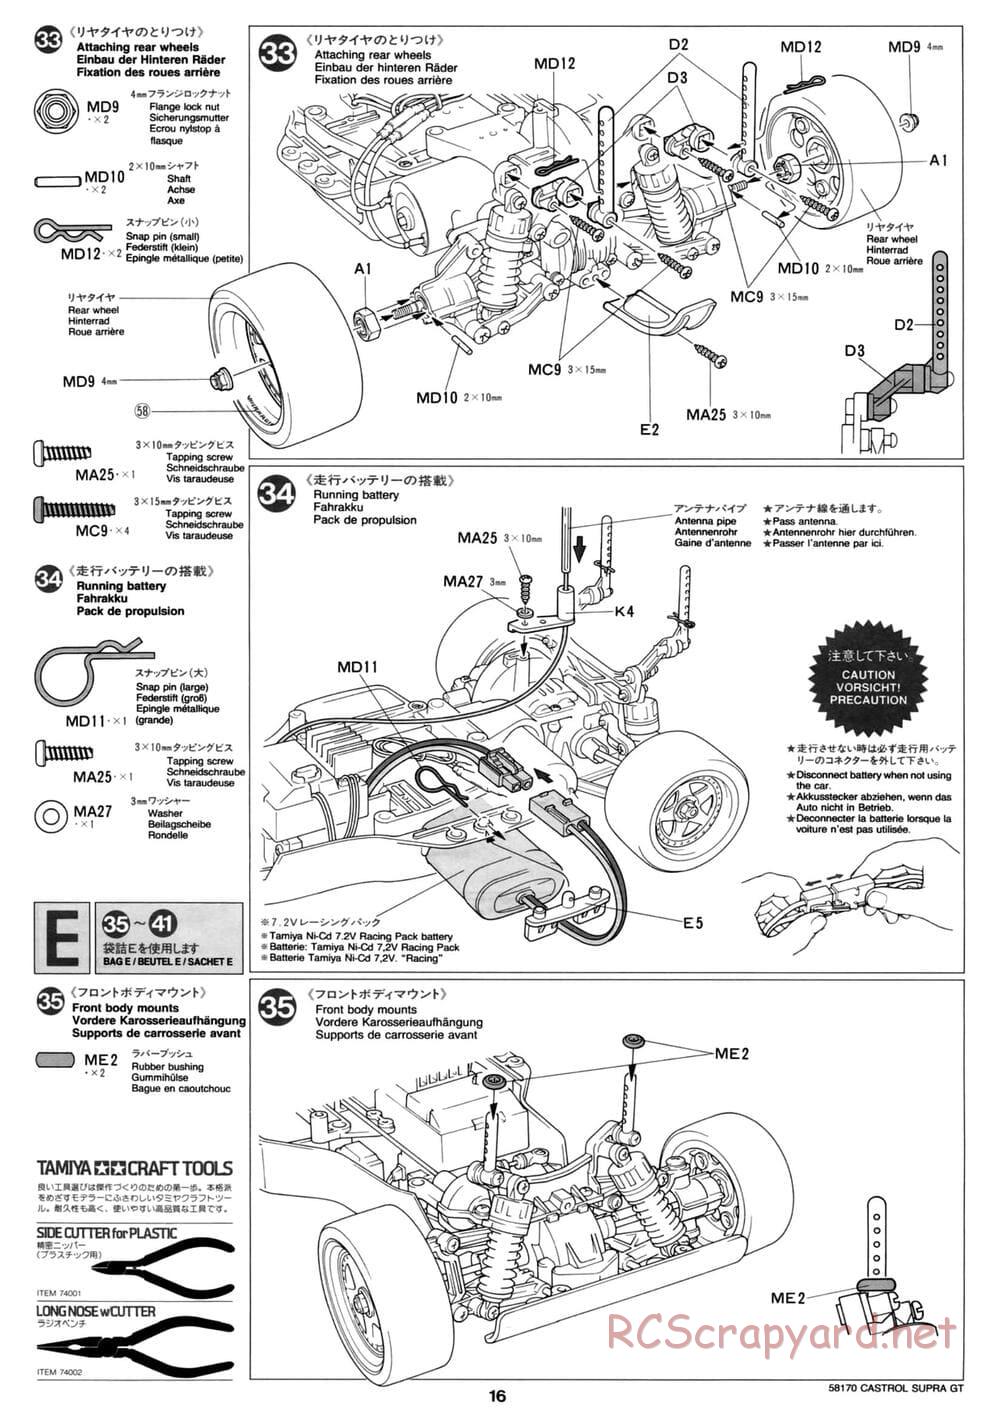 Tamiya - Castrol Toyota Tom's Supra GT - TA-02W Chassis - Manual - Page 16